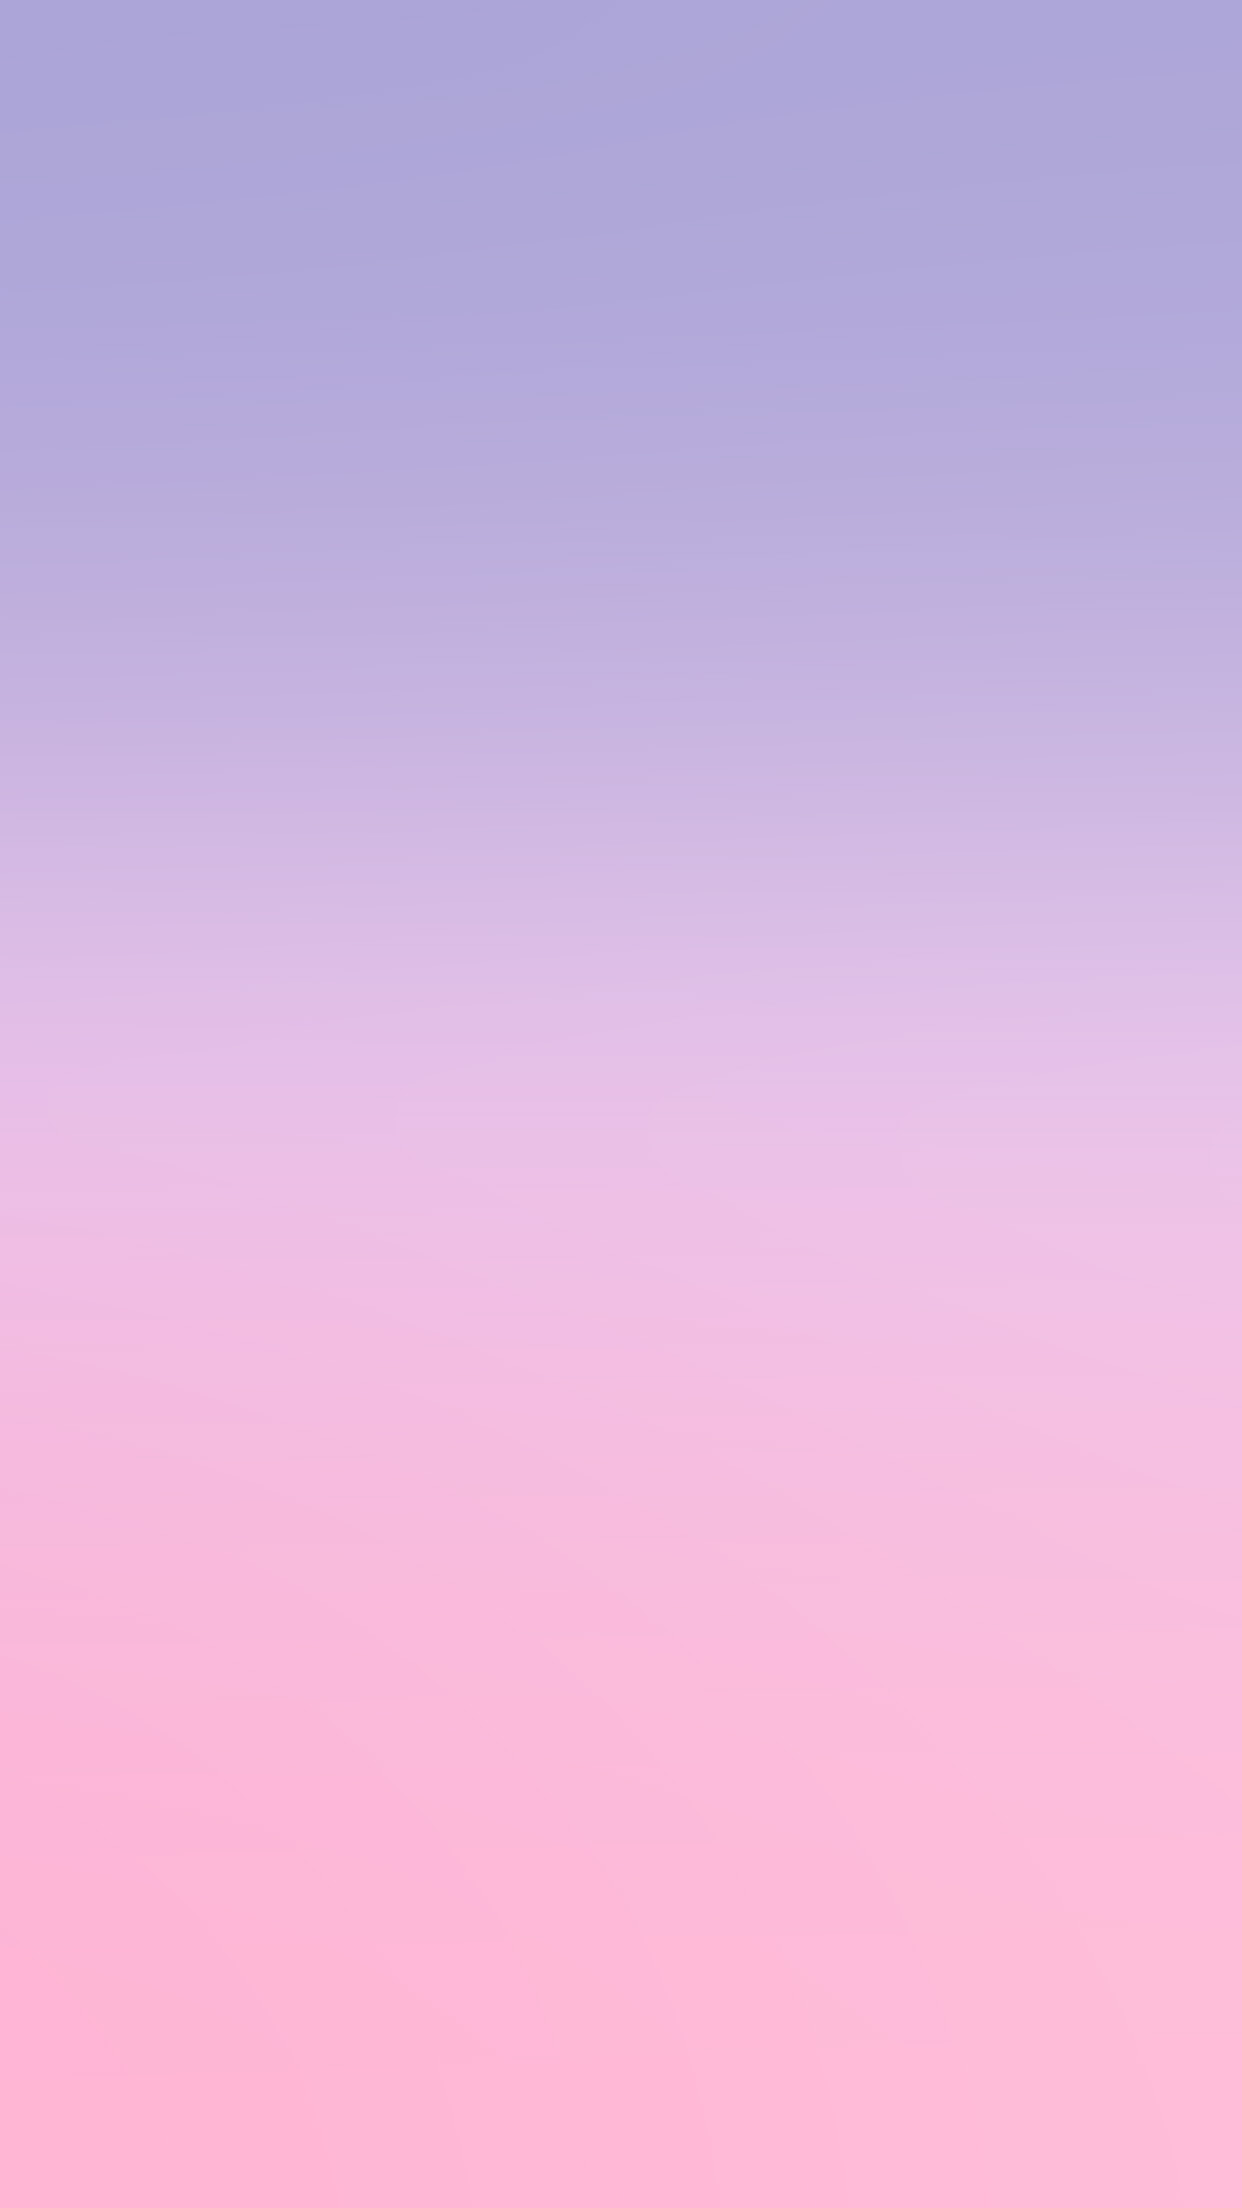 1242x2208 so75-blur-gradation-pink-purple-pastel-wallpaper